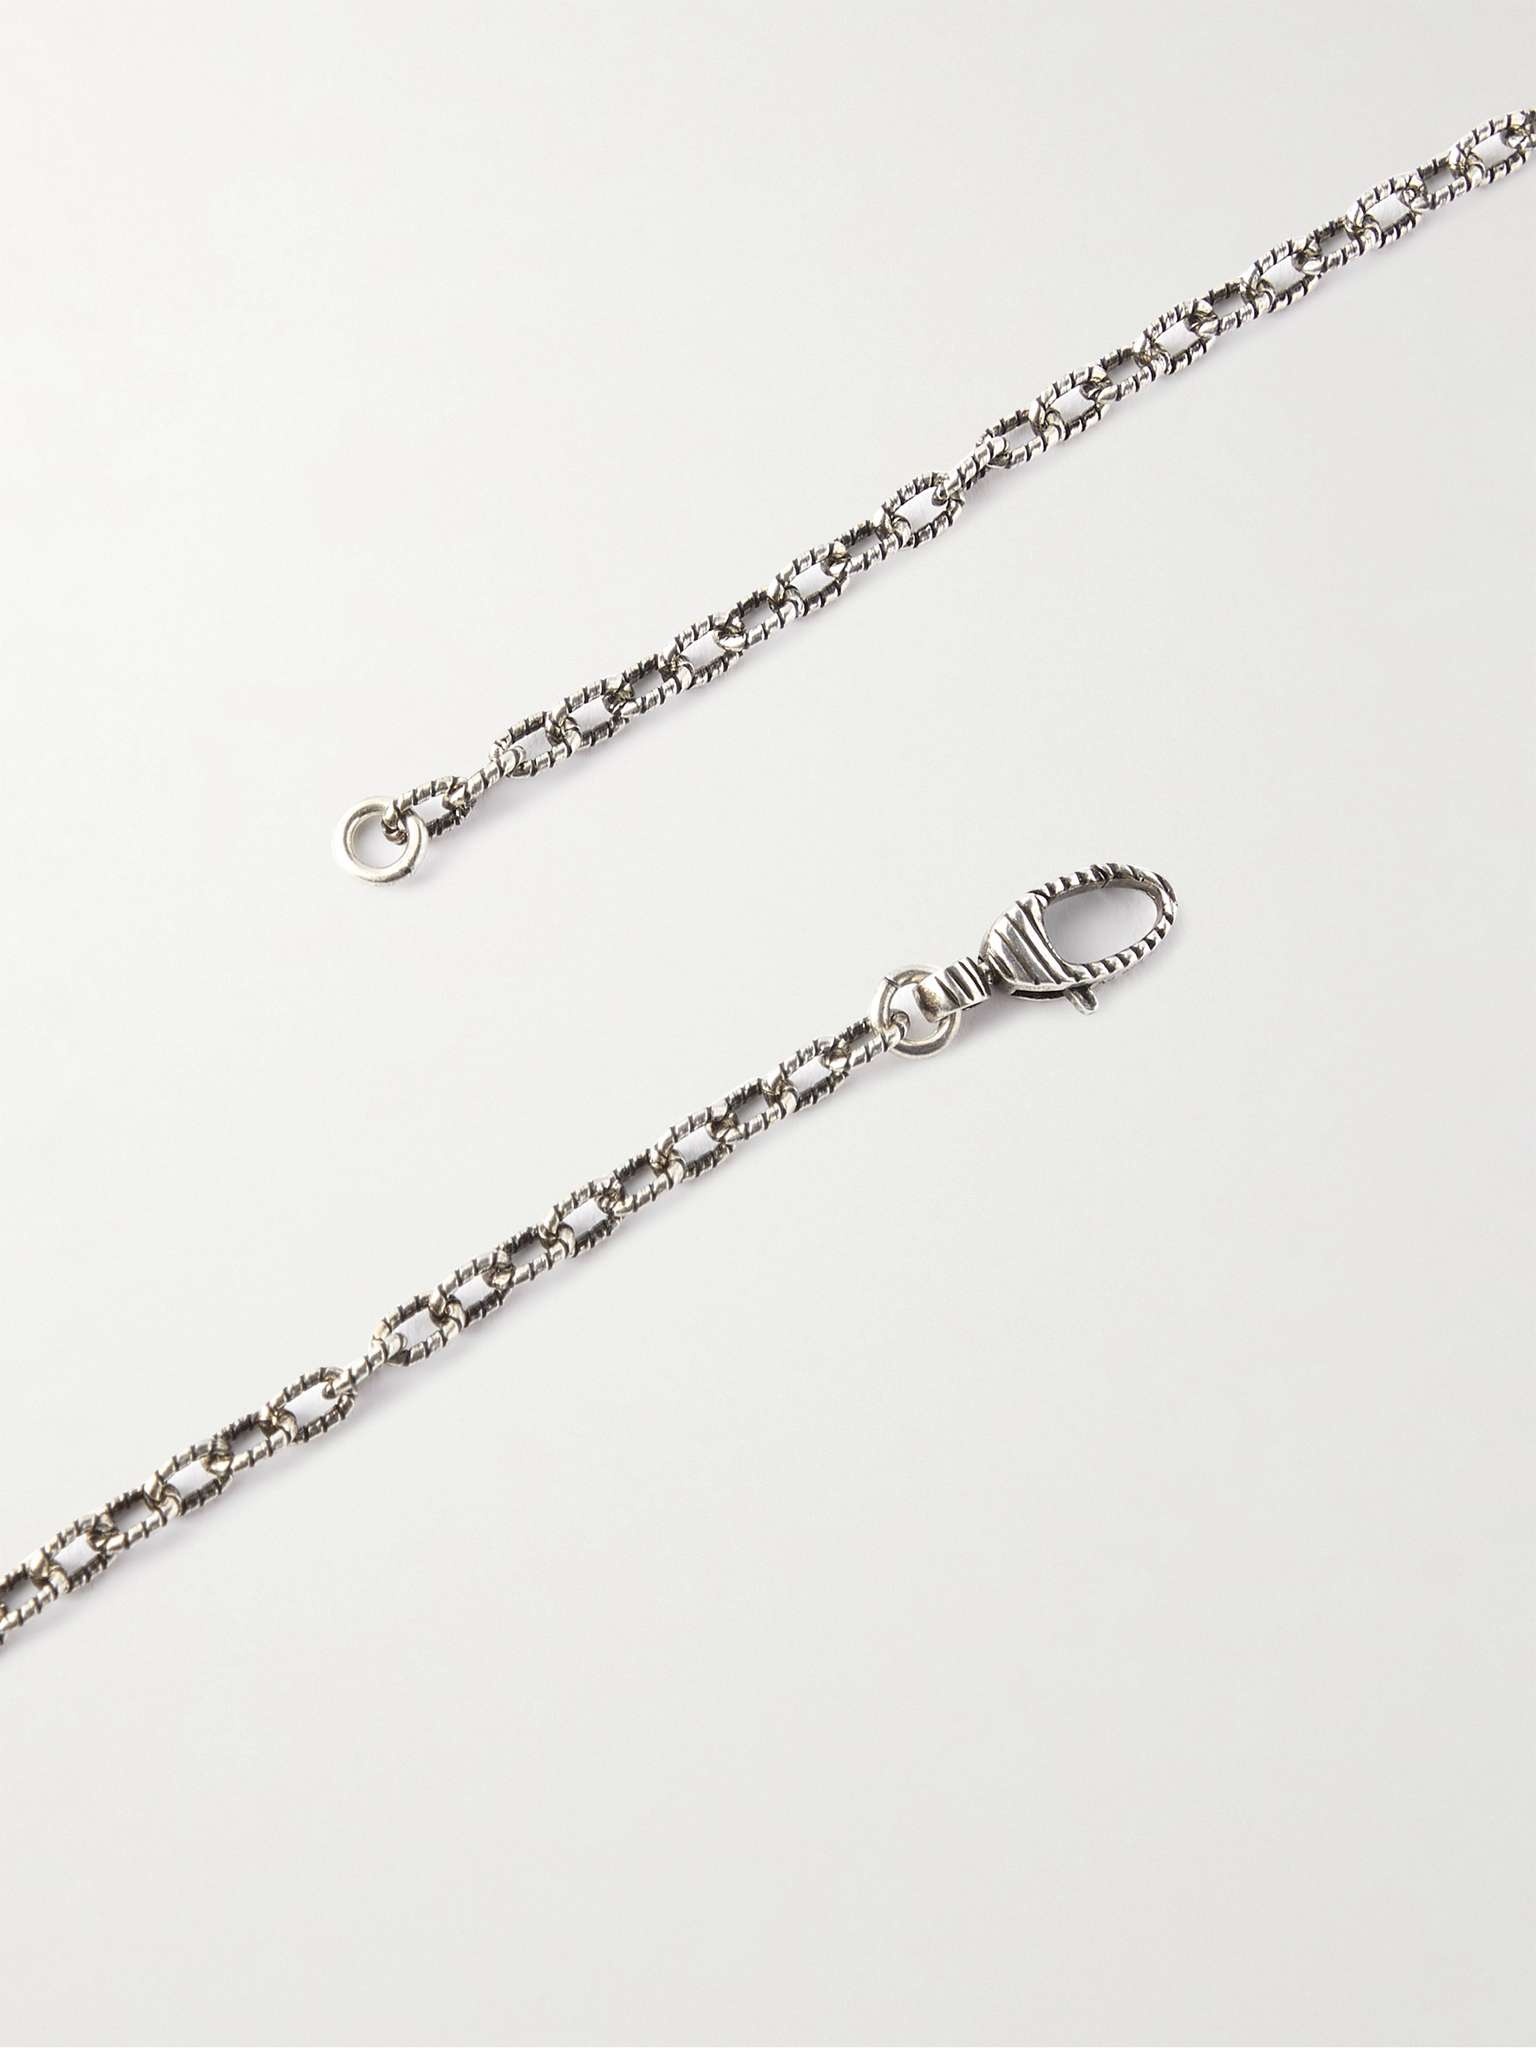 Burnished Sterling Silver Pendant Necklace - 3